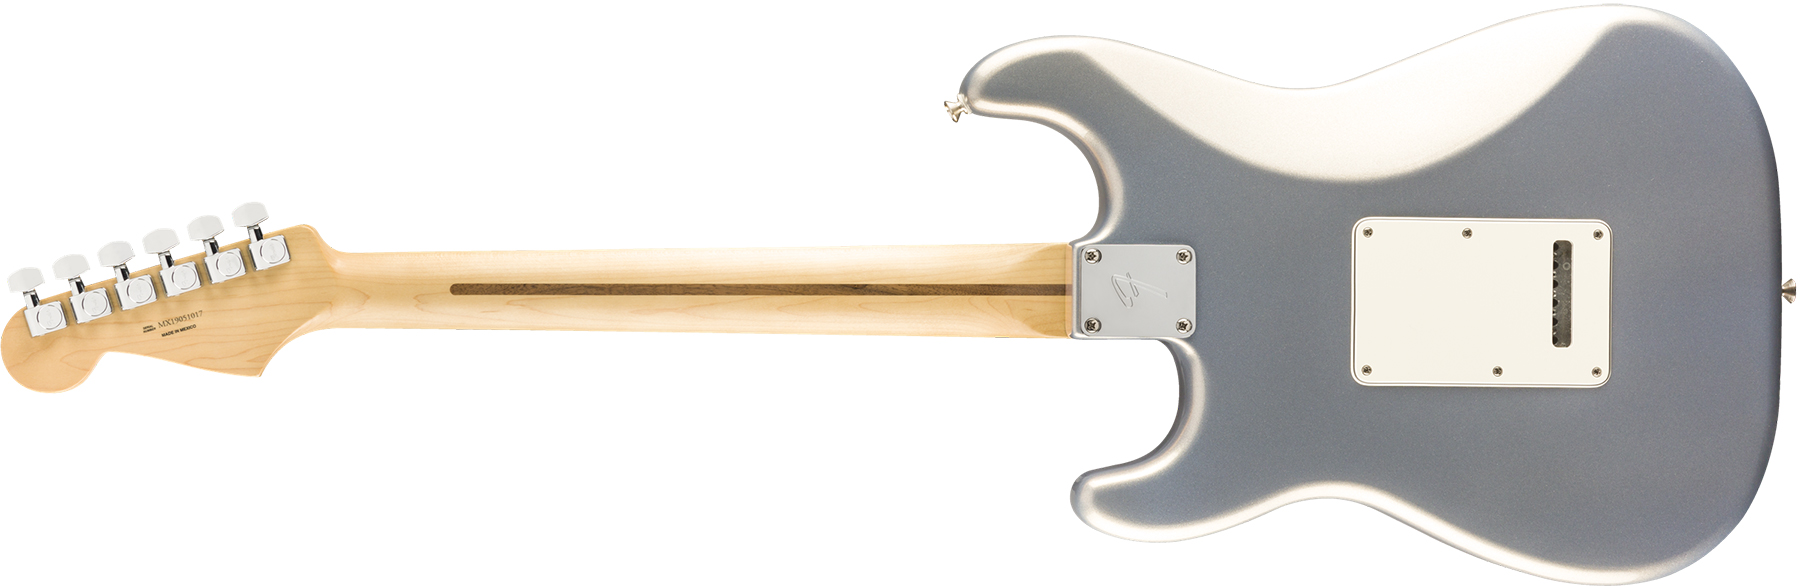 Fender Strat Player Mex 3s Trem Pf - Silver - Guitarra eléctrica con forma de str. - Variation 1